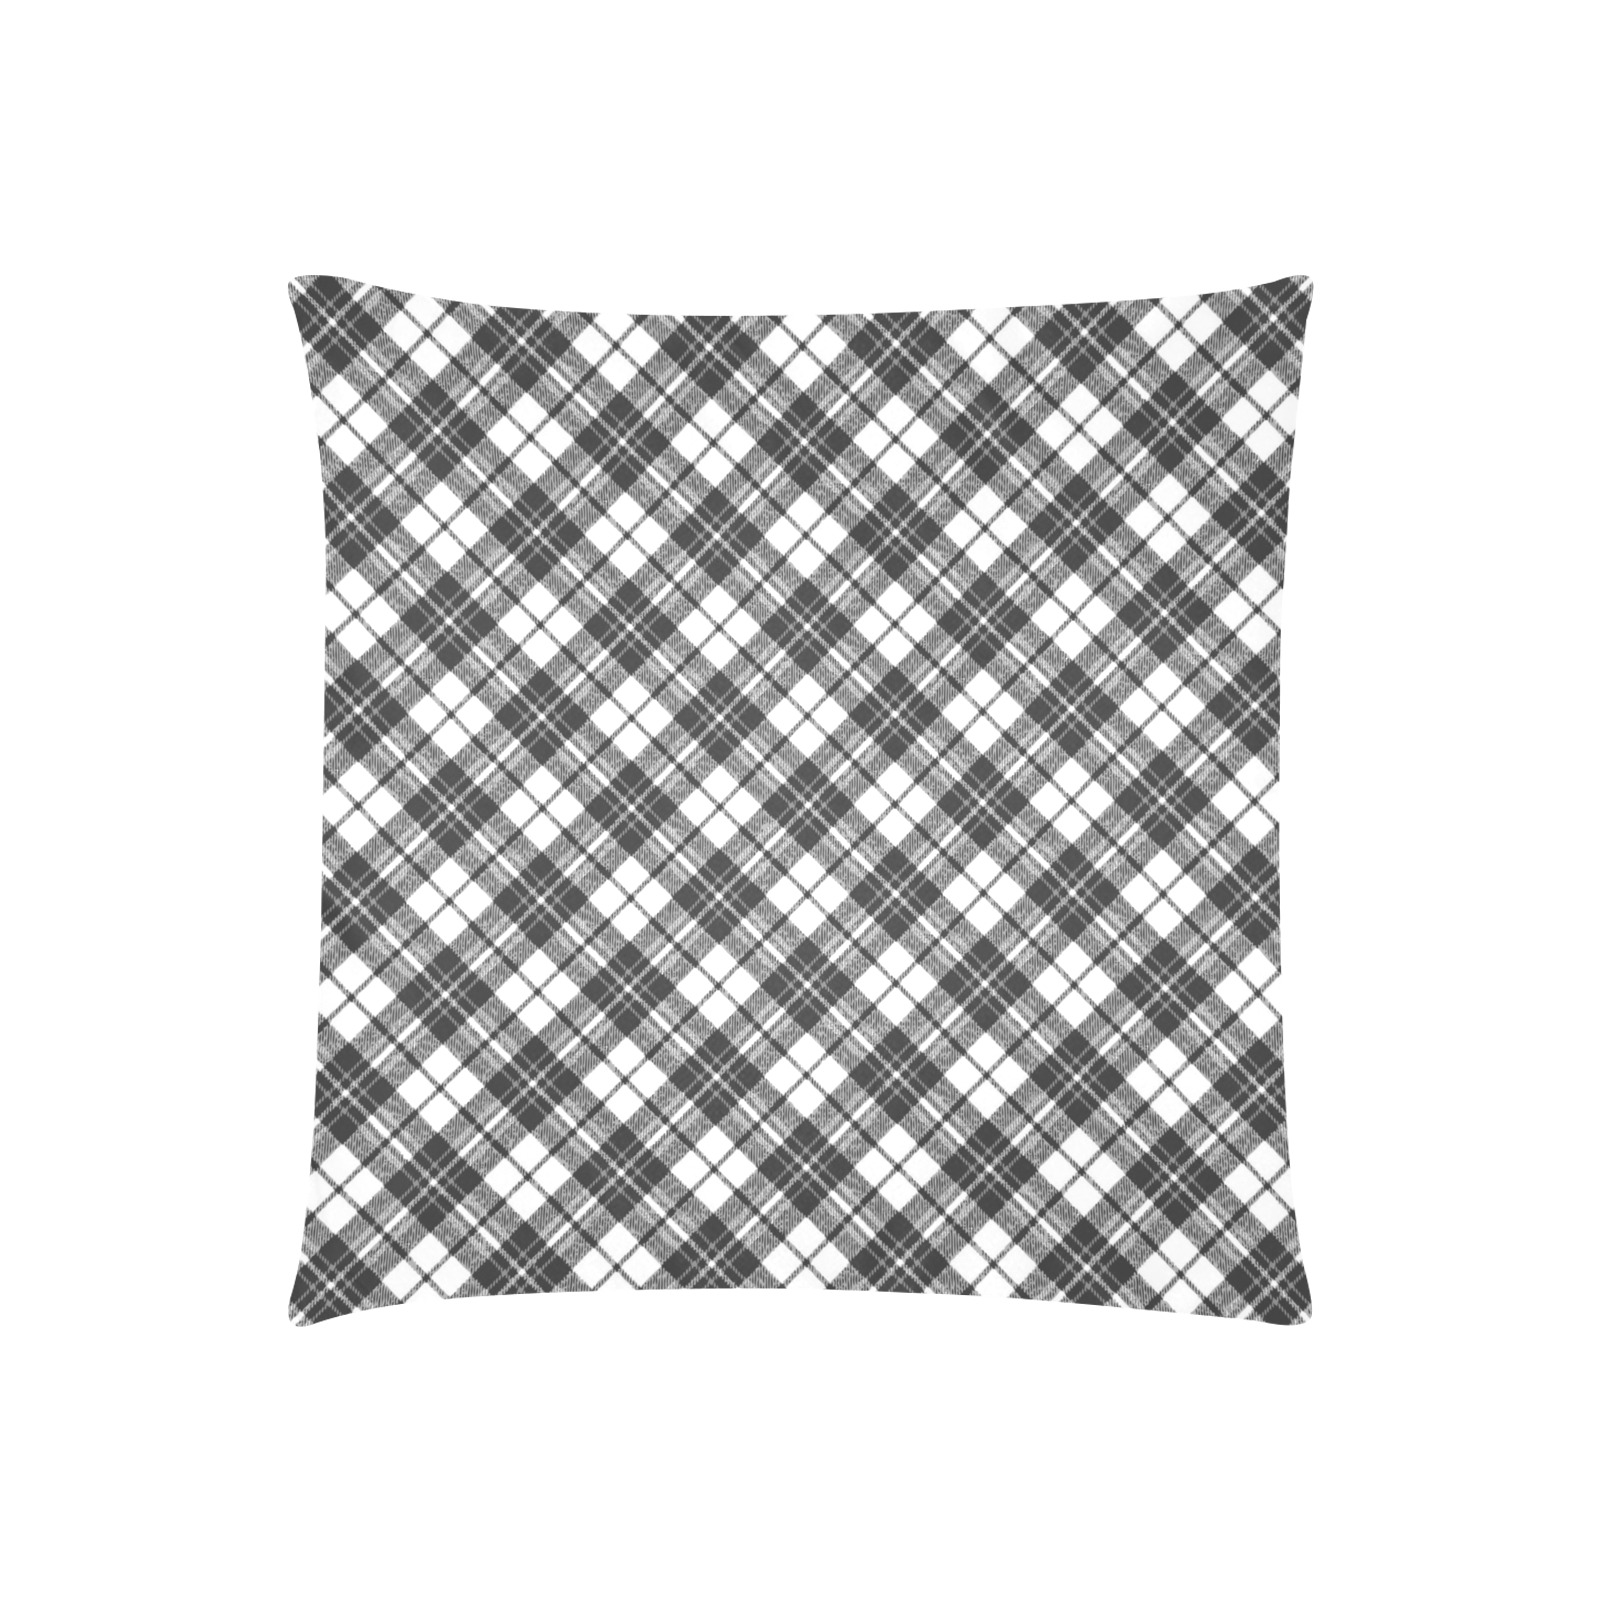 Tartan black white pattern holidays Christmas xmas elegant lines geometric cool fun classic elegance Custom Zippered Pillow Cases 20"x20" (Two Sides)